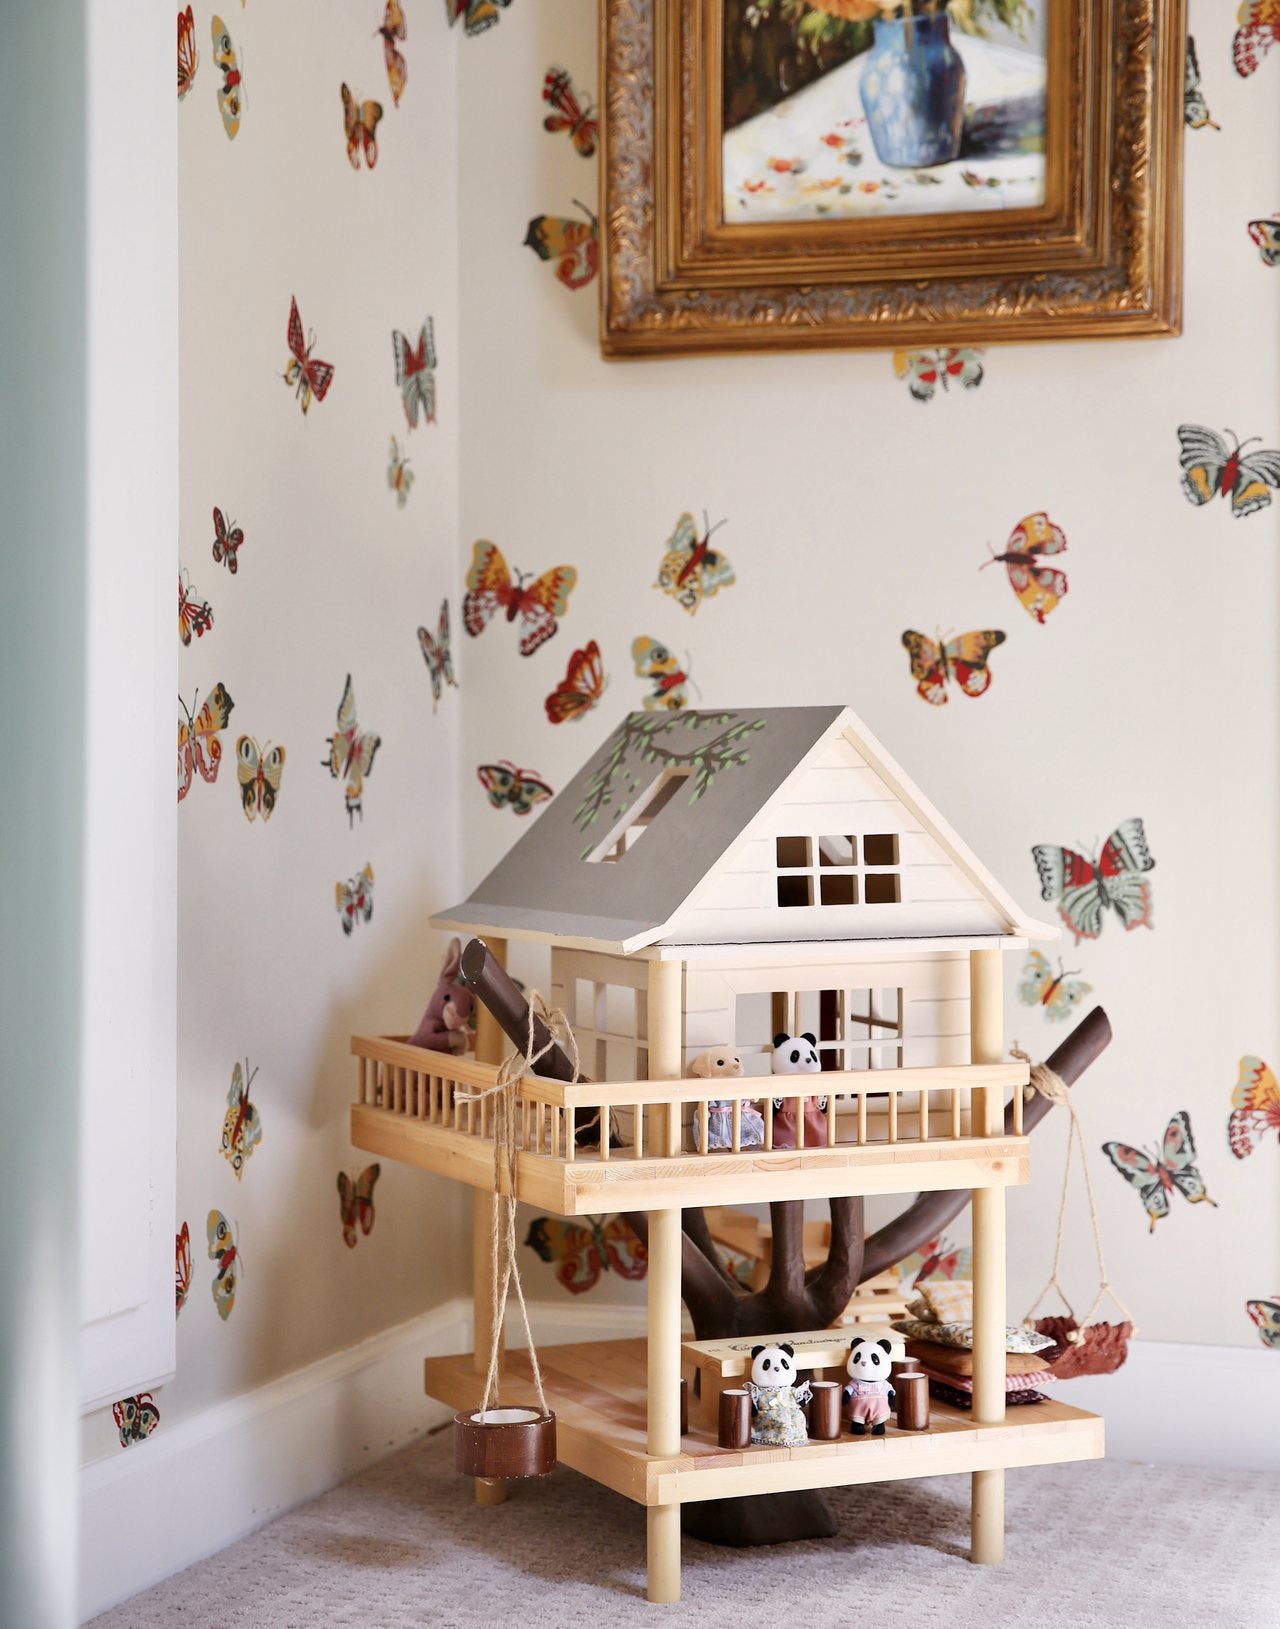 Butterflies wallpaper in a girls room designed by Mary Lauren Gunn | Nathalie Lete x Hygge & West